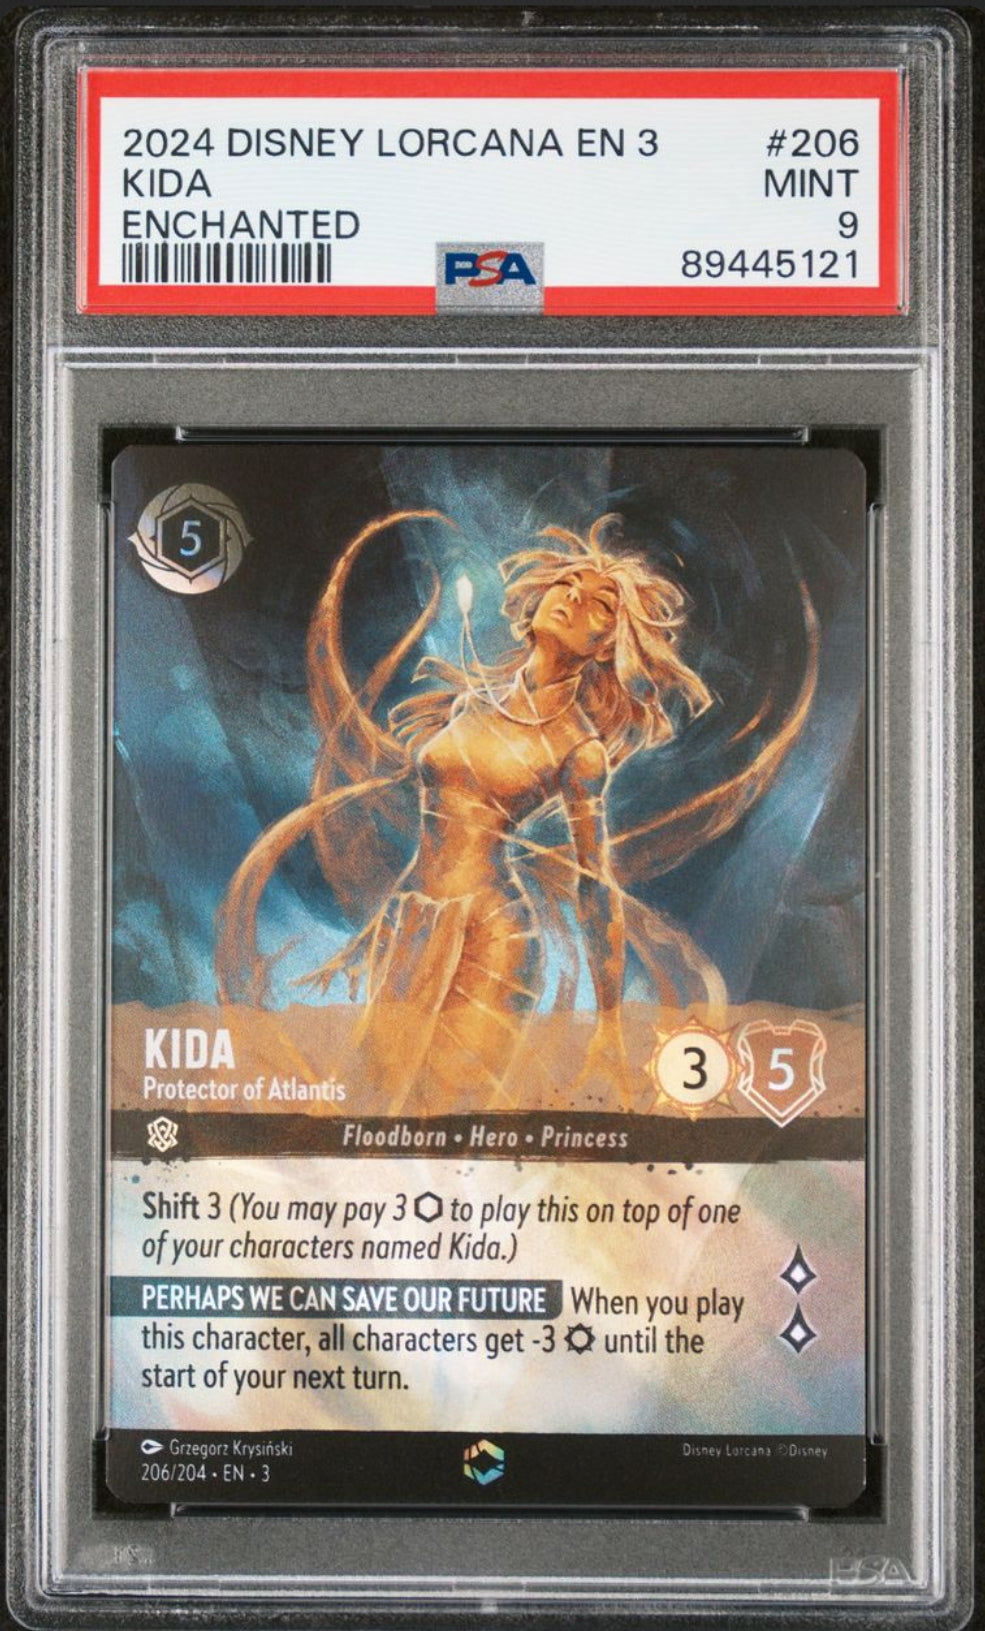 Kida - Protector of Atlantis - [Foil, Enchanted, Graded PSA 9] Into the Inklands (3)